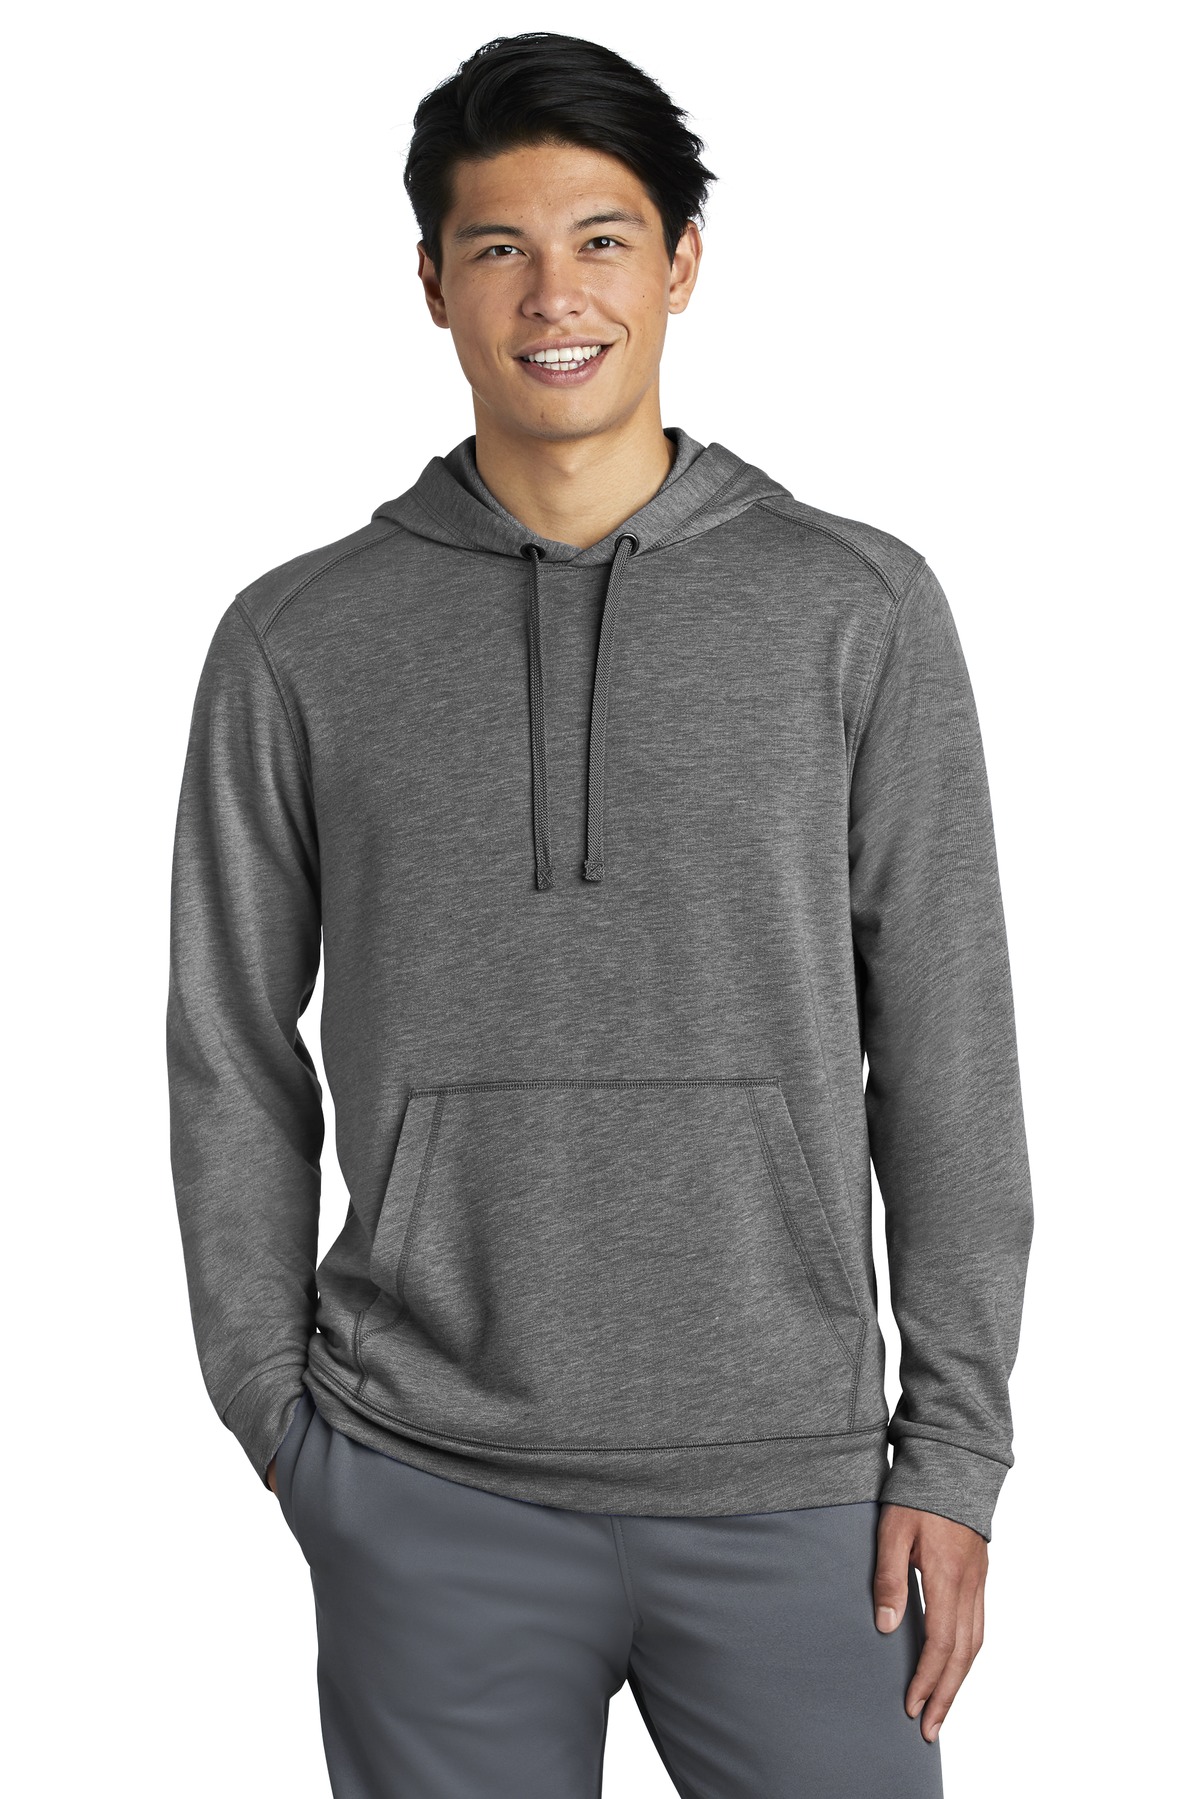 Sport-Tek Hospitality Sweatshirts & Fleece ® PosiCharge ® Tri-Blend Wicking Fleece Hooded Pullover.-Sport-Tek